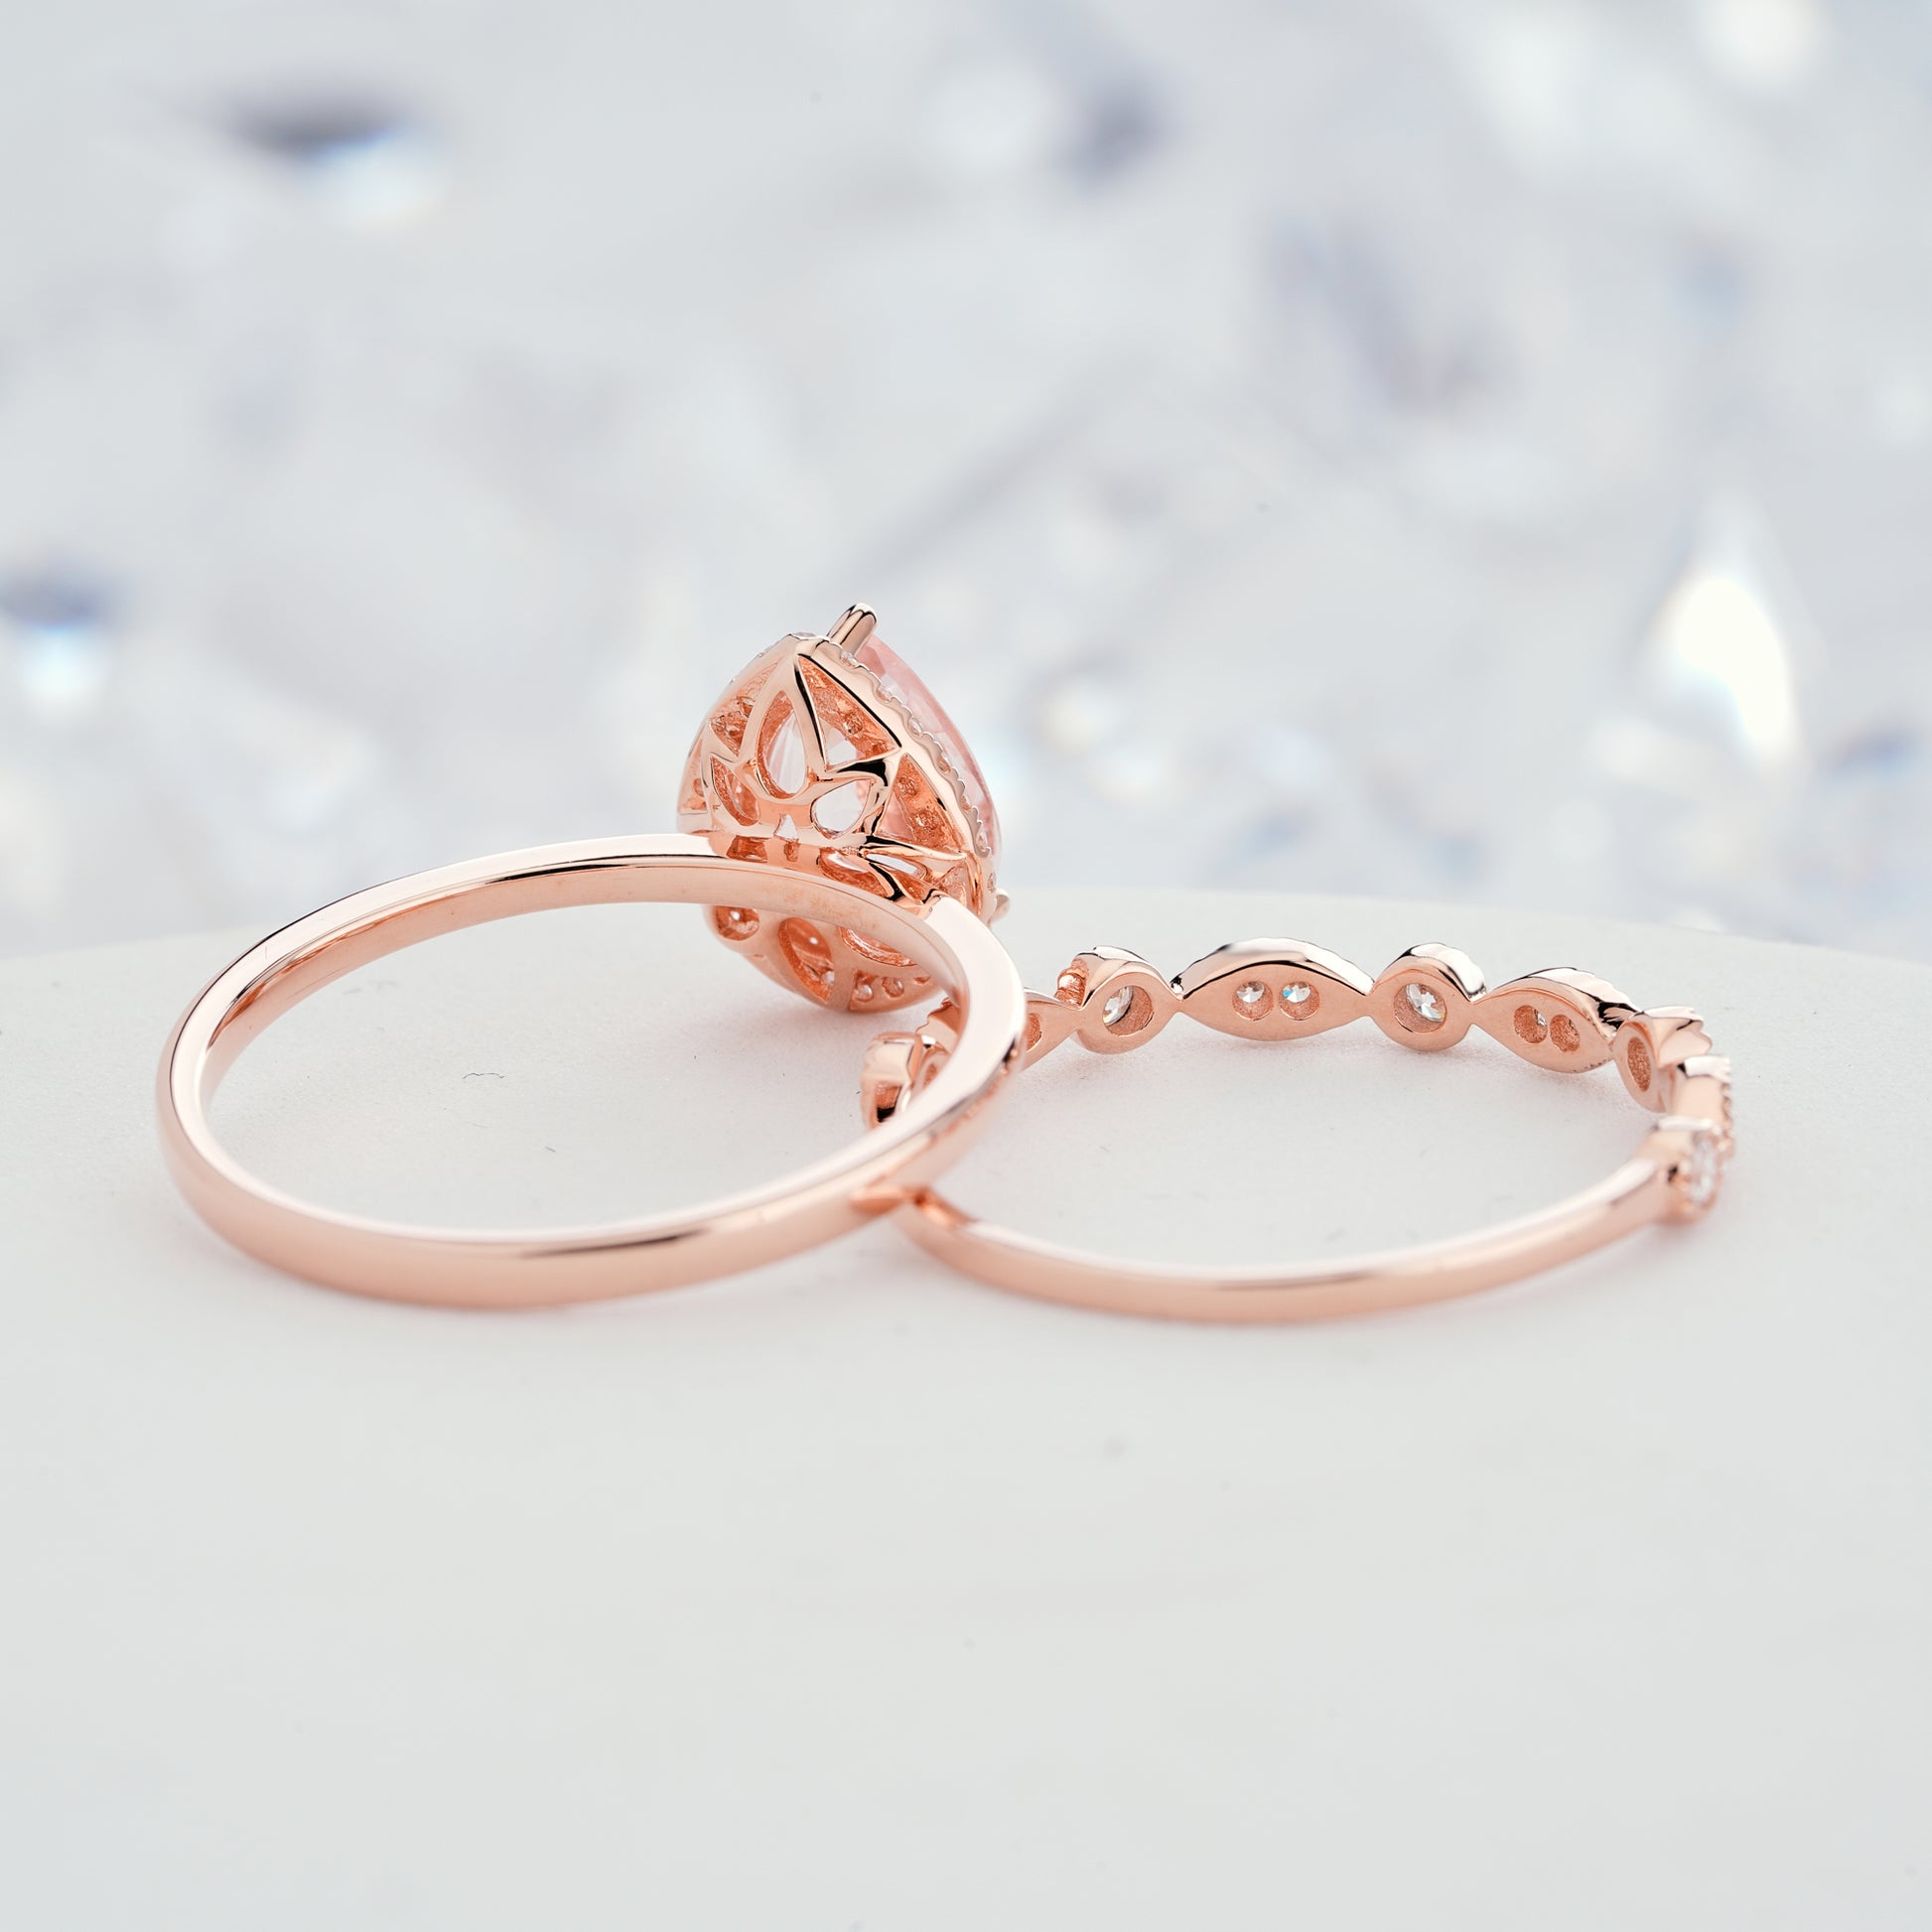 1.2ct Pear Cut Natural Pink Morganite Engagement Ring Set in14K/18K Gold Halo Custom Teardrop Ring - ShainJewelry